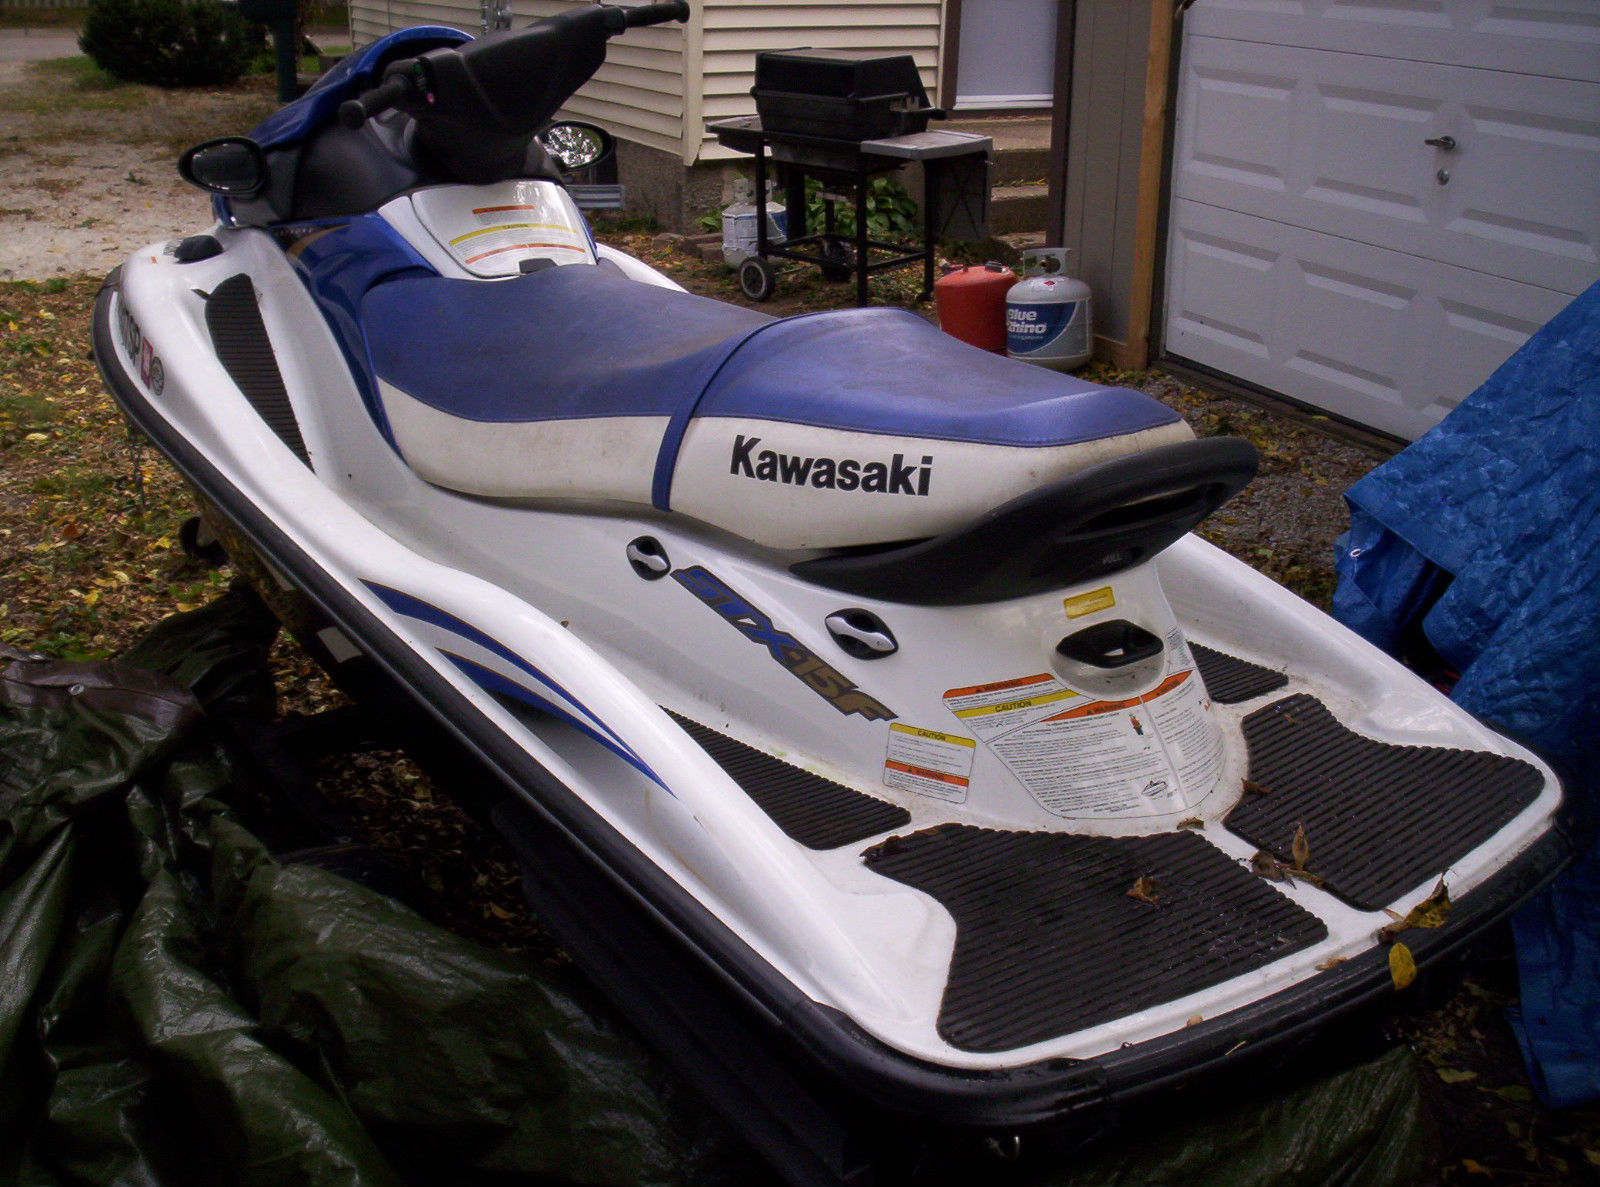 pensum ekstra Kollega Kawasaki STX 15F 2005 for sale for $1,850 - Boats-from-USA.com